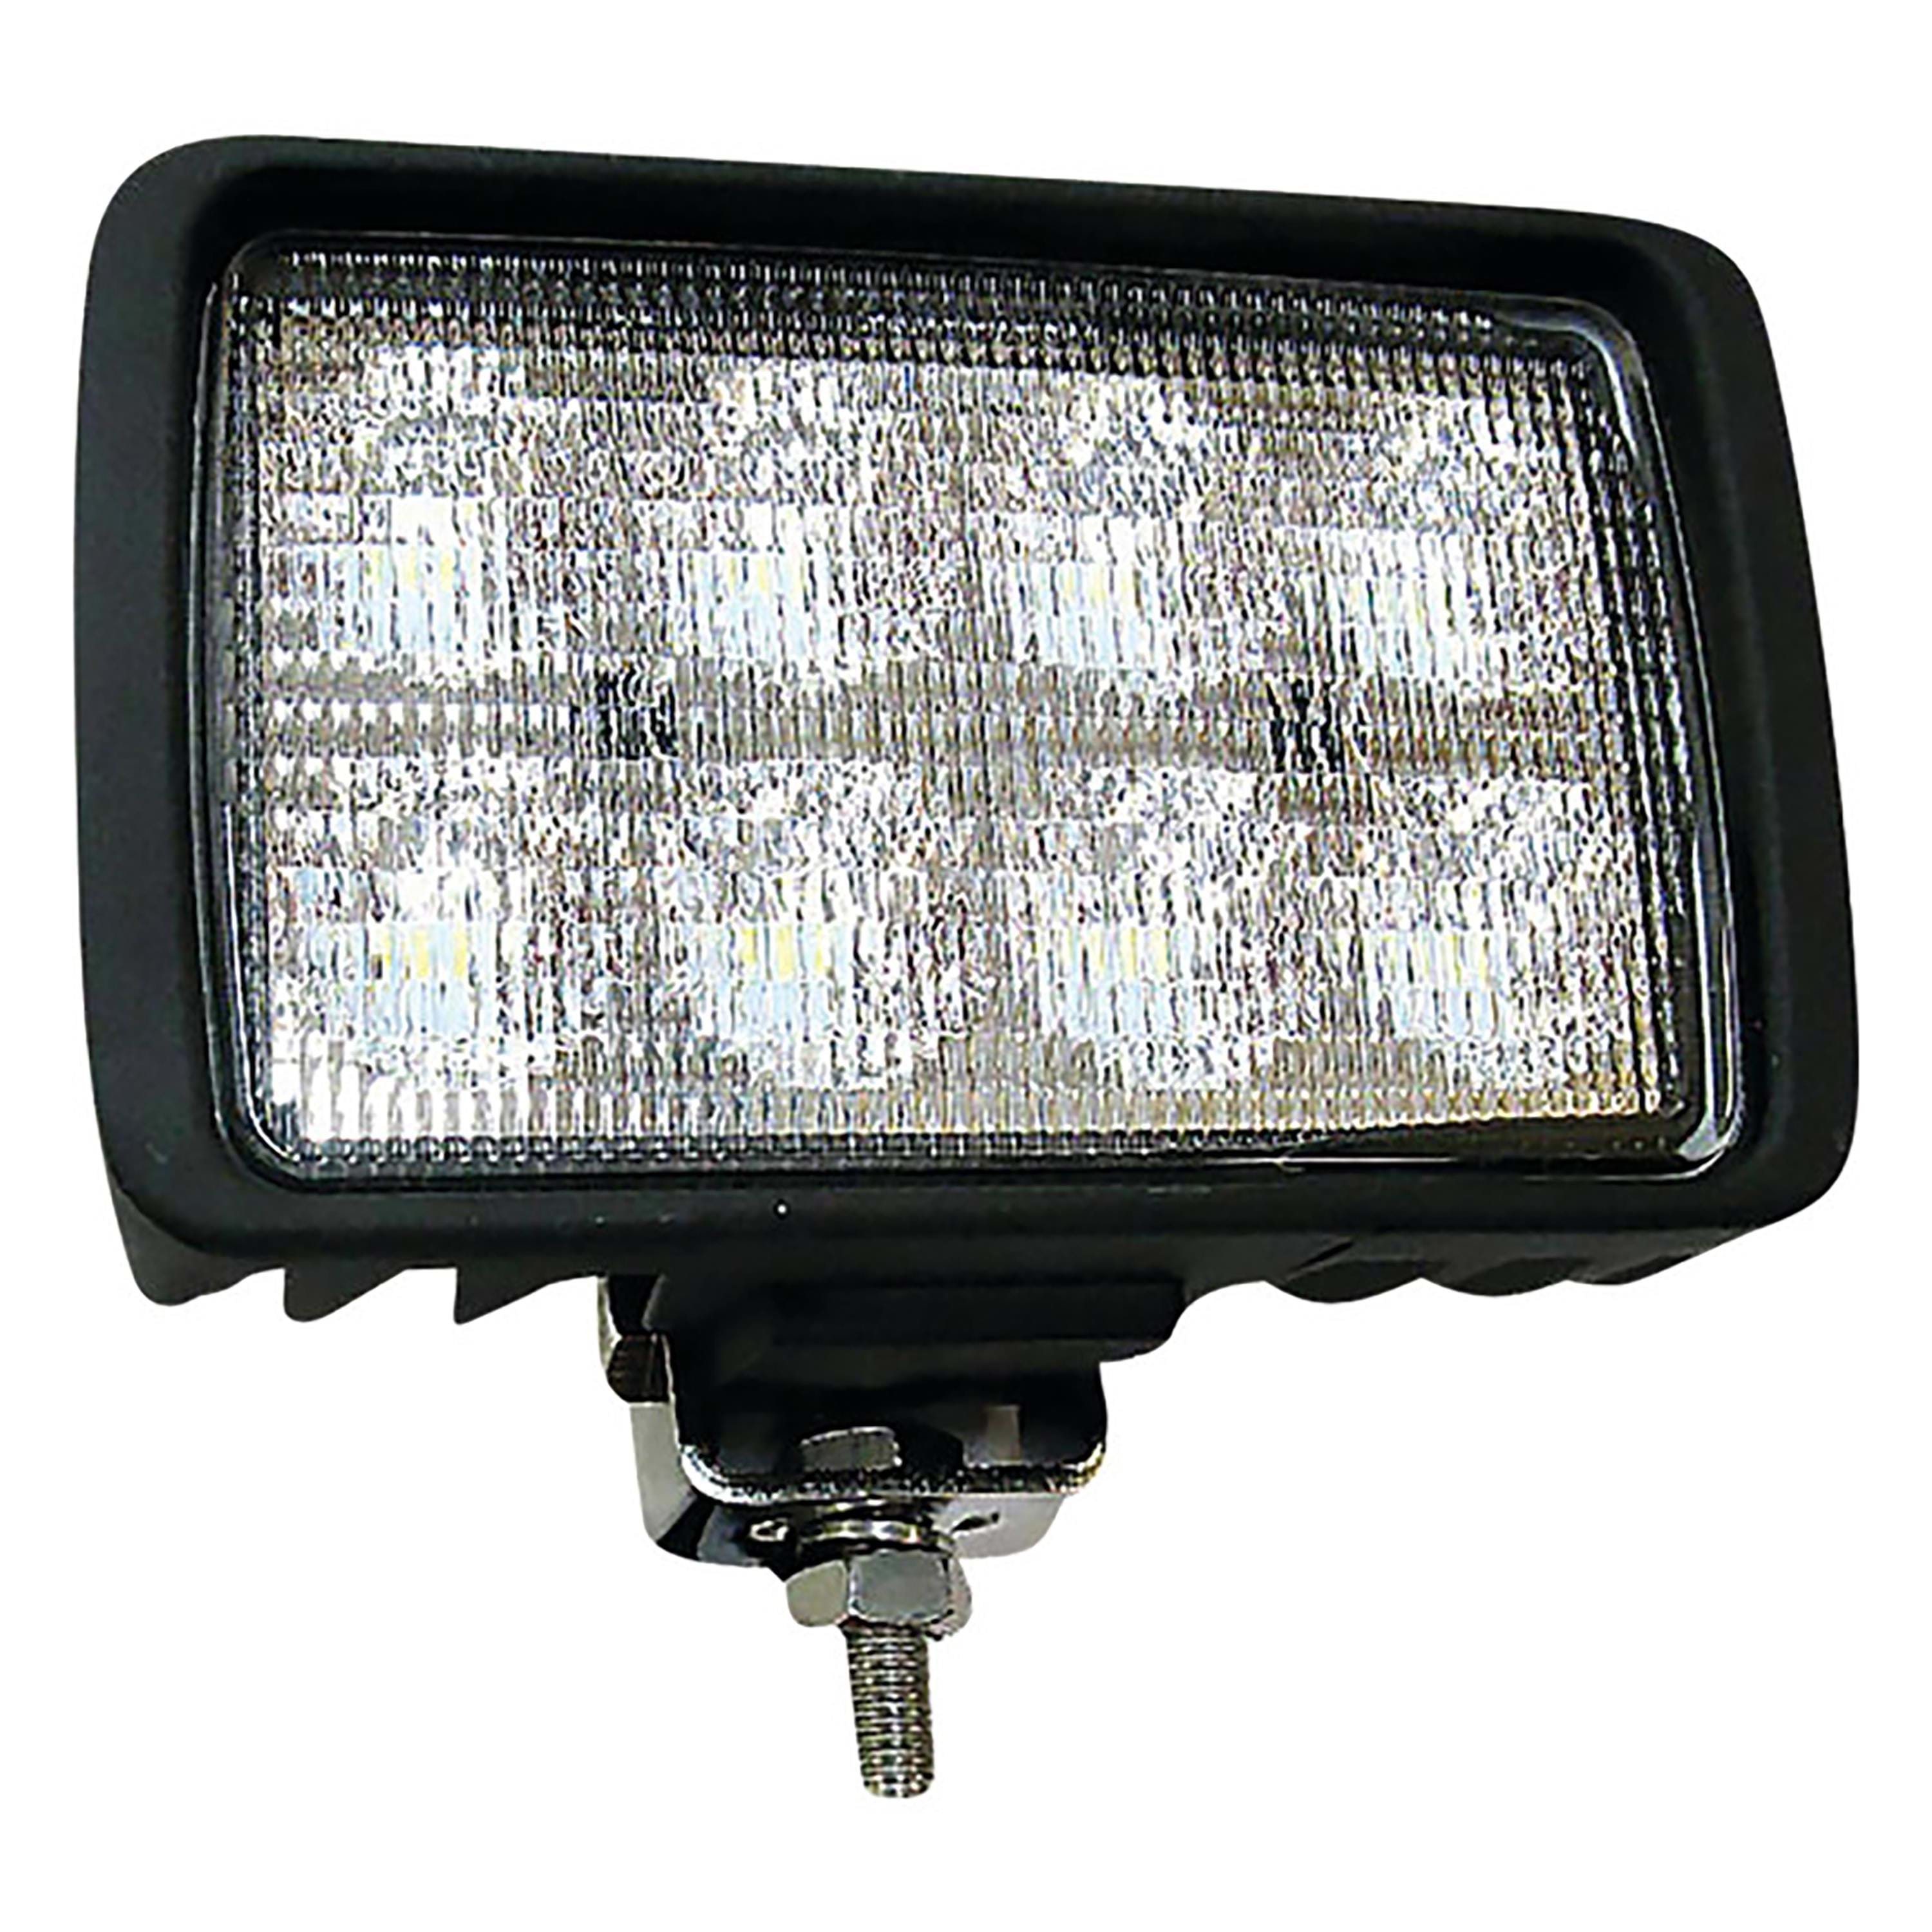 Tiger Lights Industrial LED Tractor Cab Light